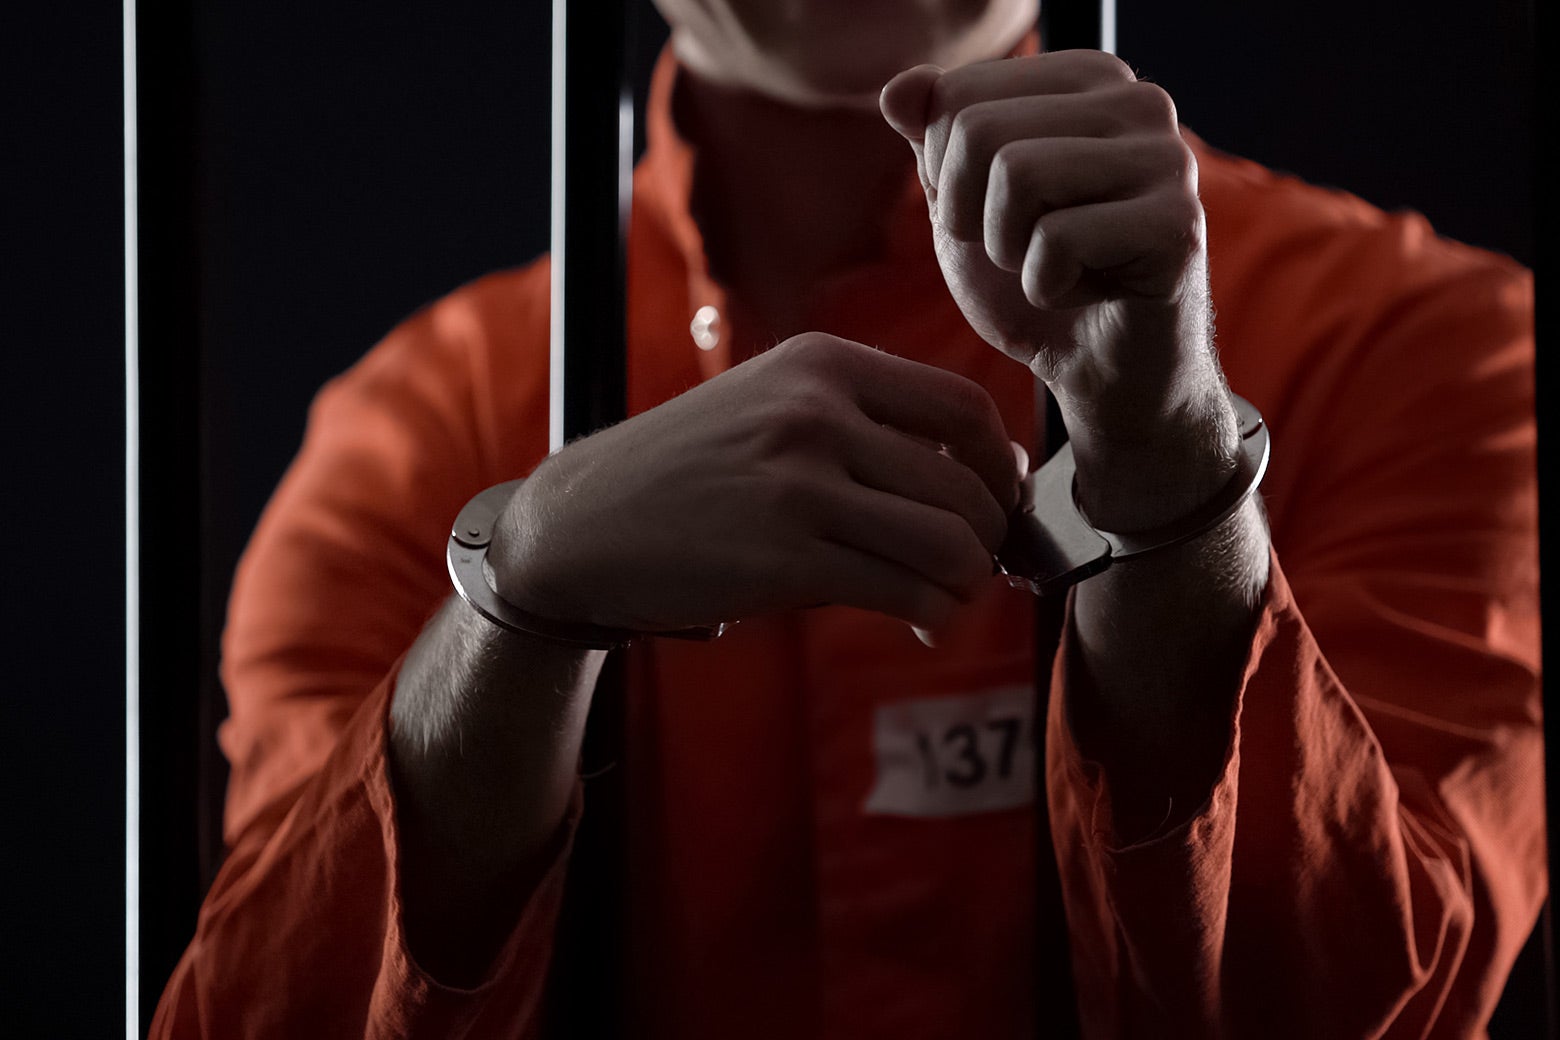 A man behind bars in handcuffs wearing an orange jumpsuit.